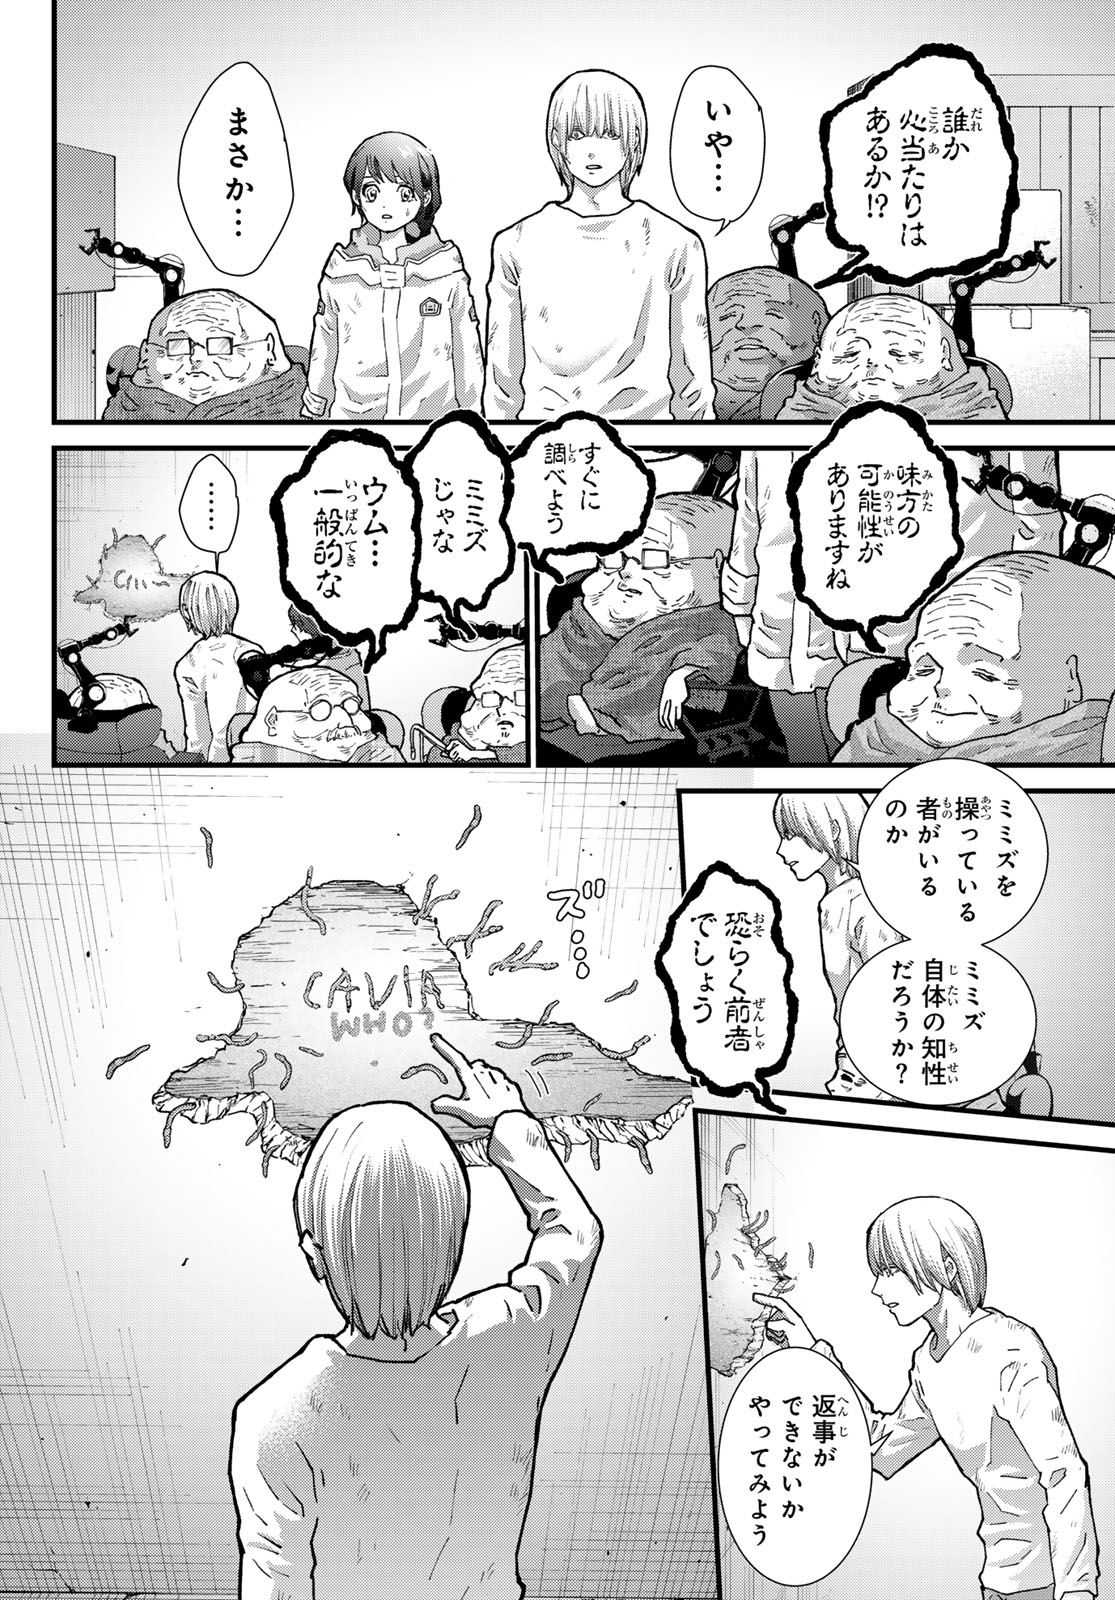 Kin to Tetsu - Chapter 30 - Page 2